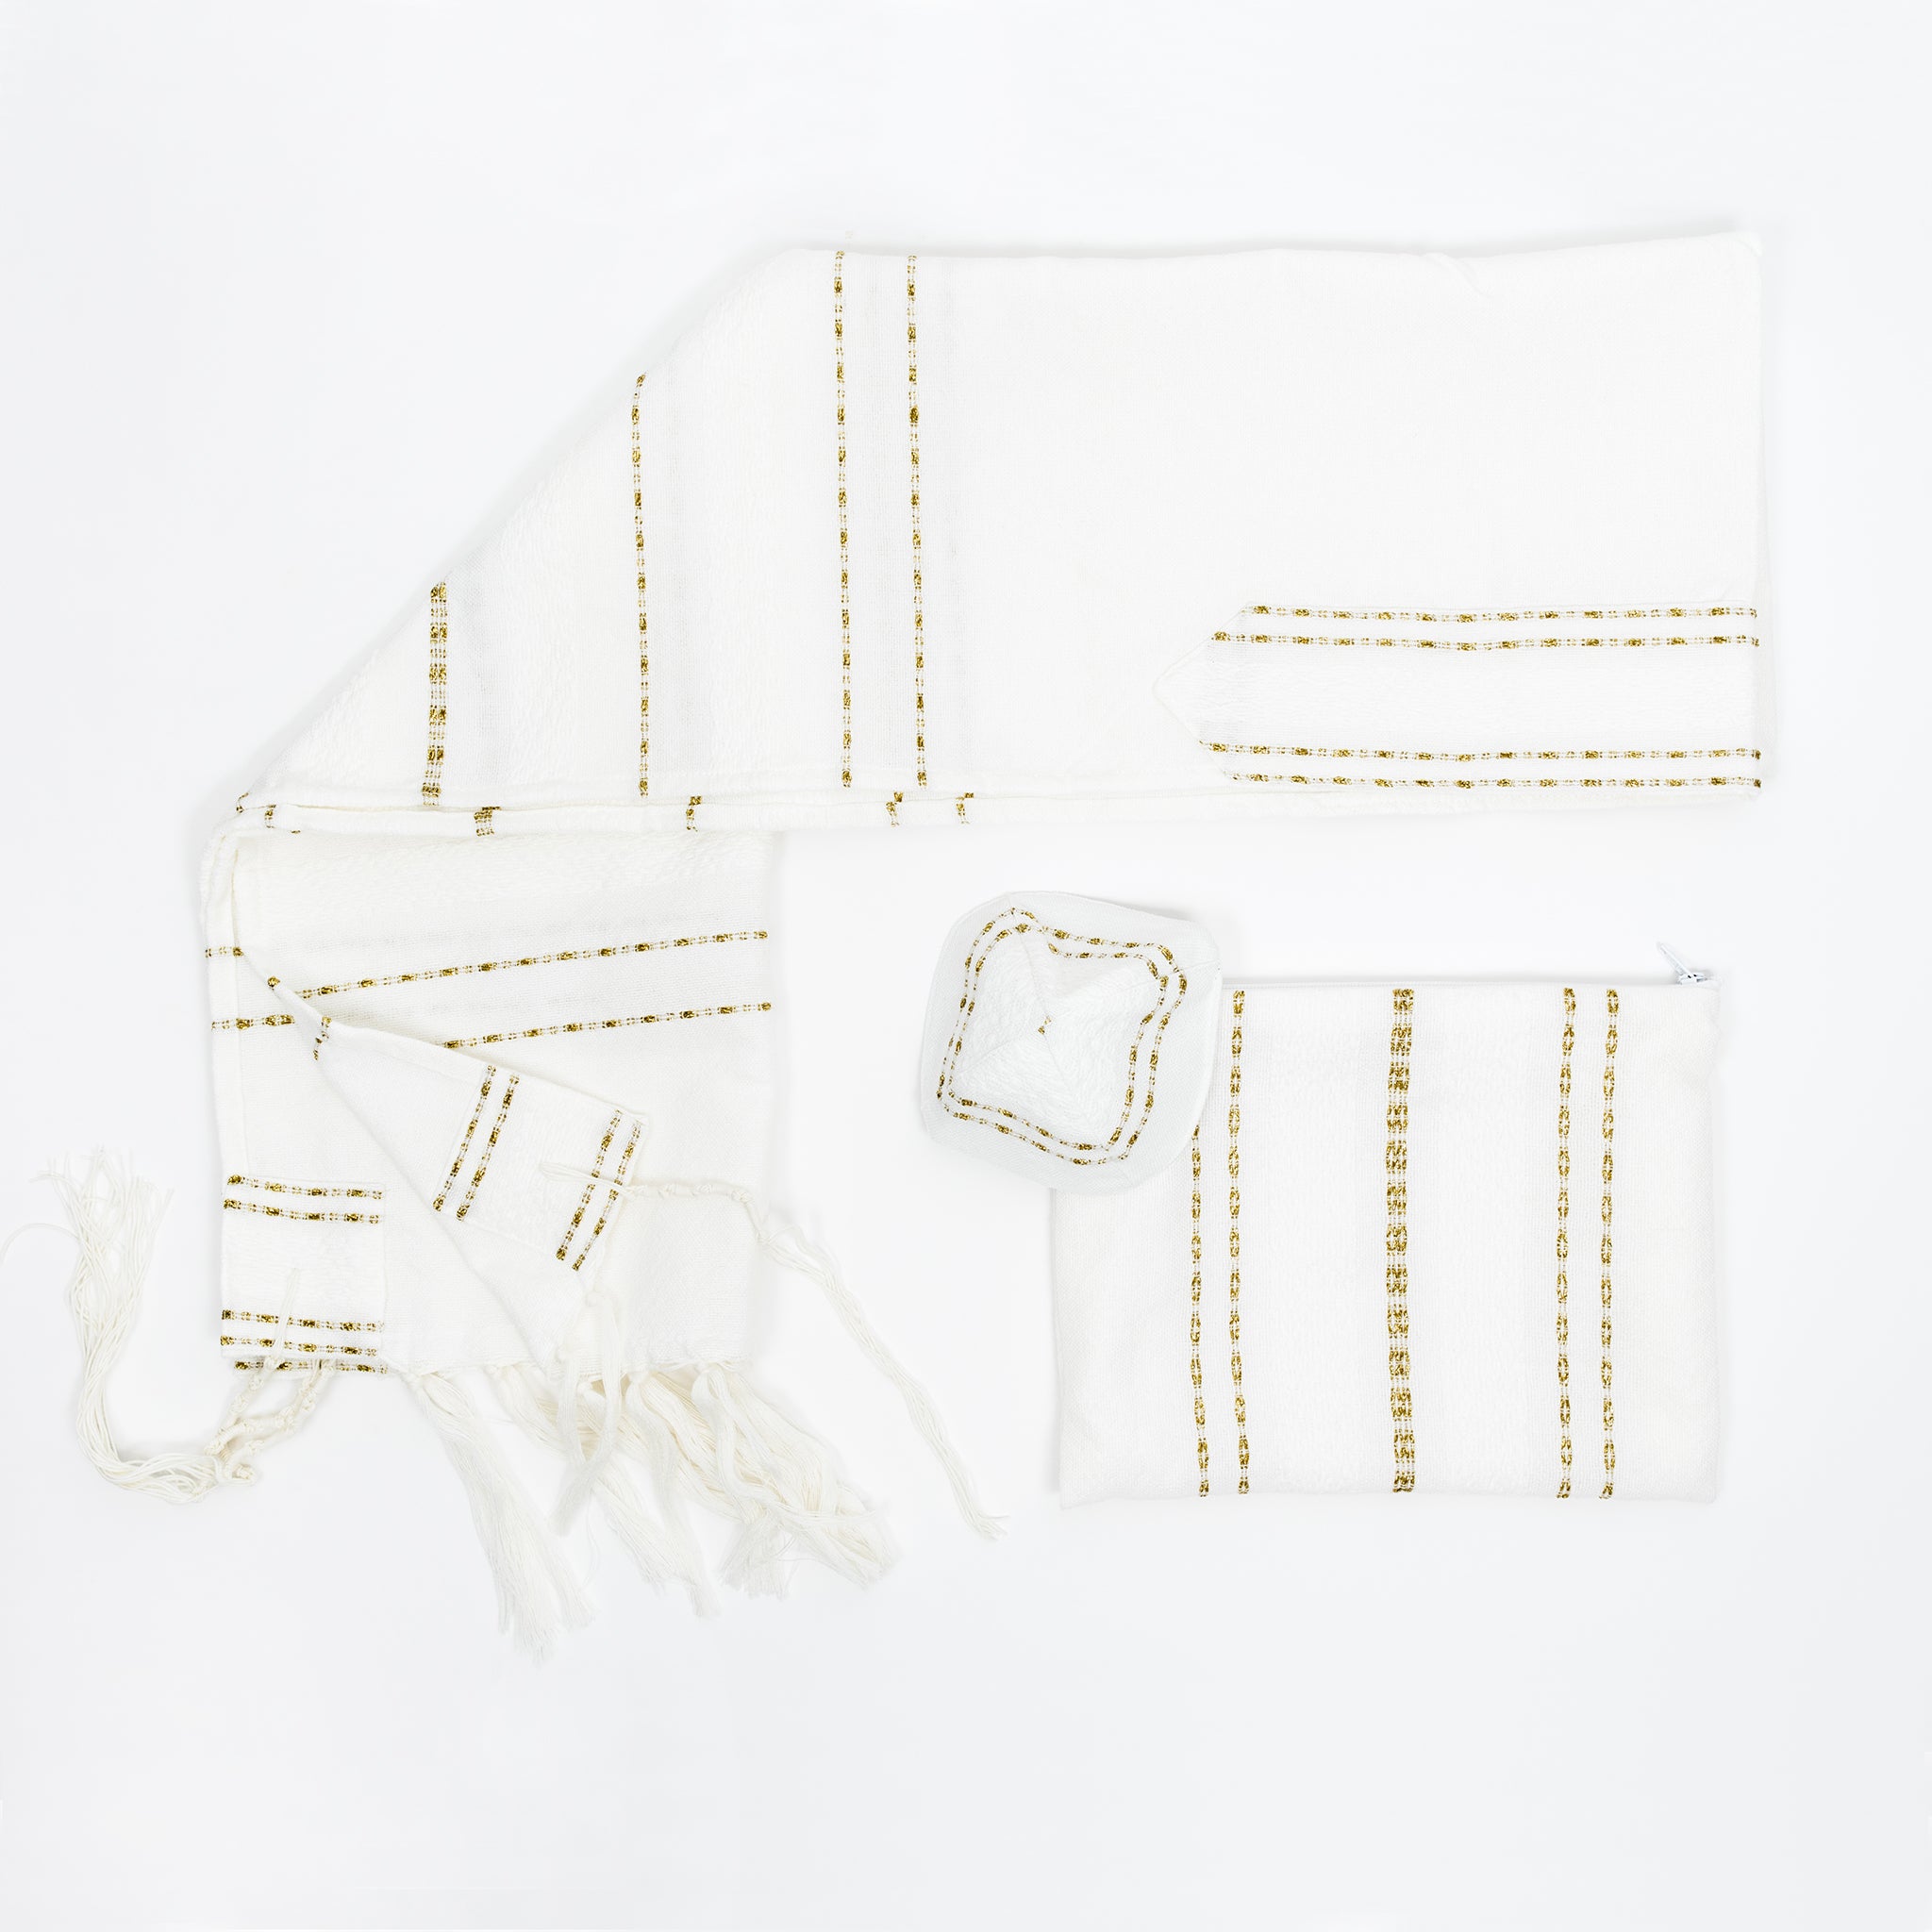 Perach - Wool Tallit - Gold on White